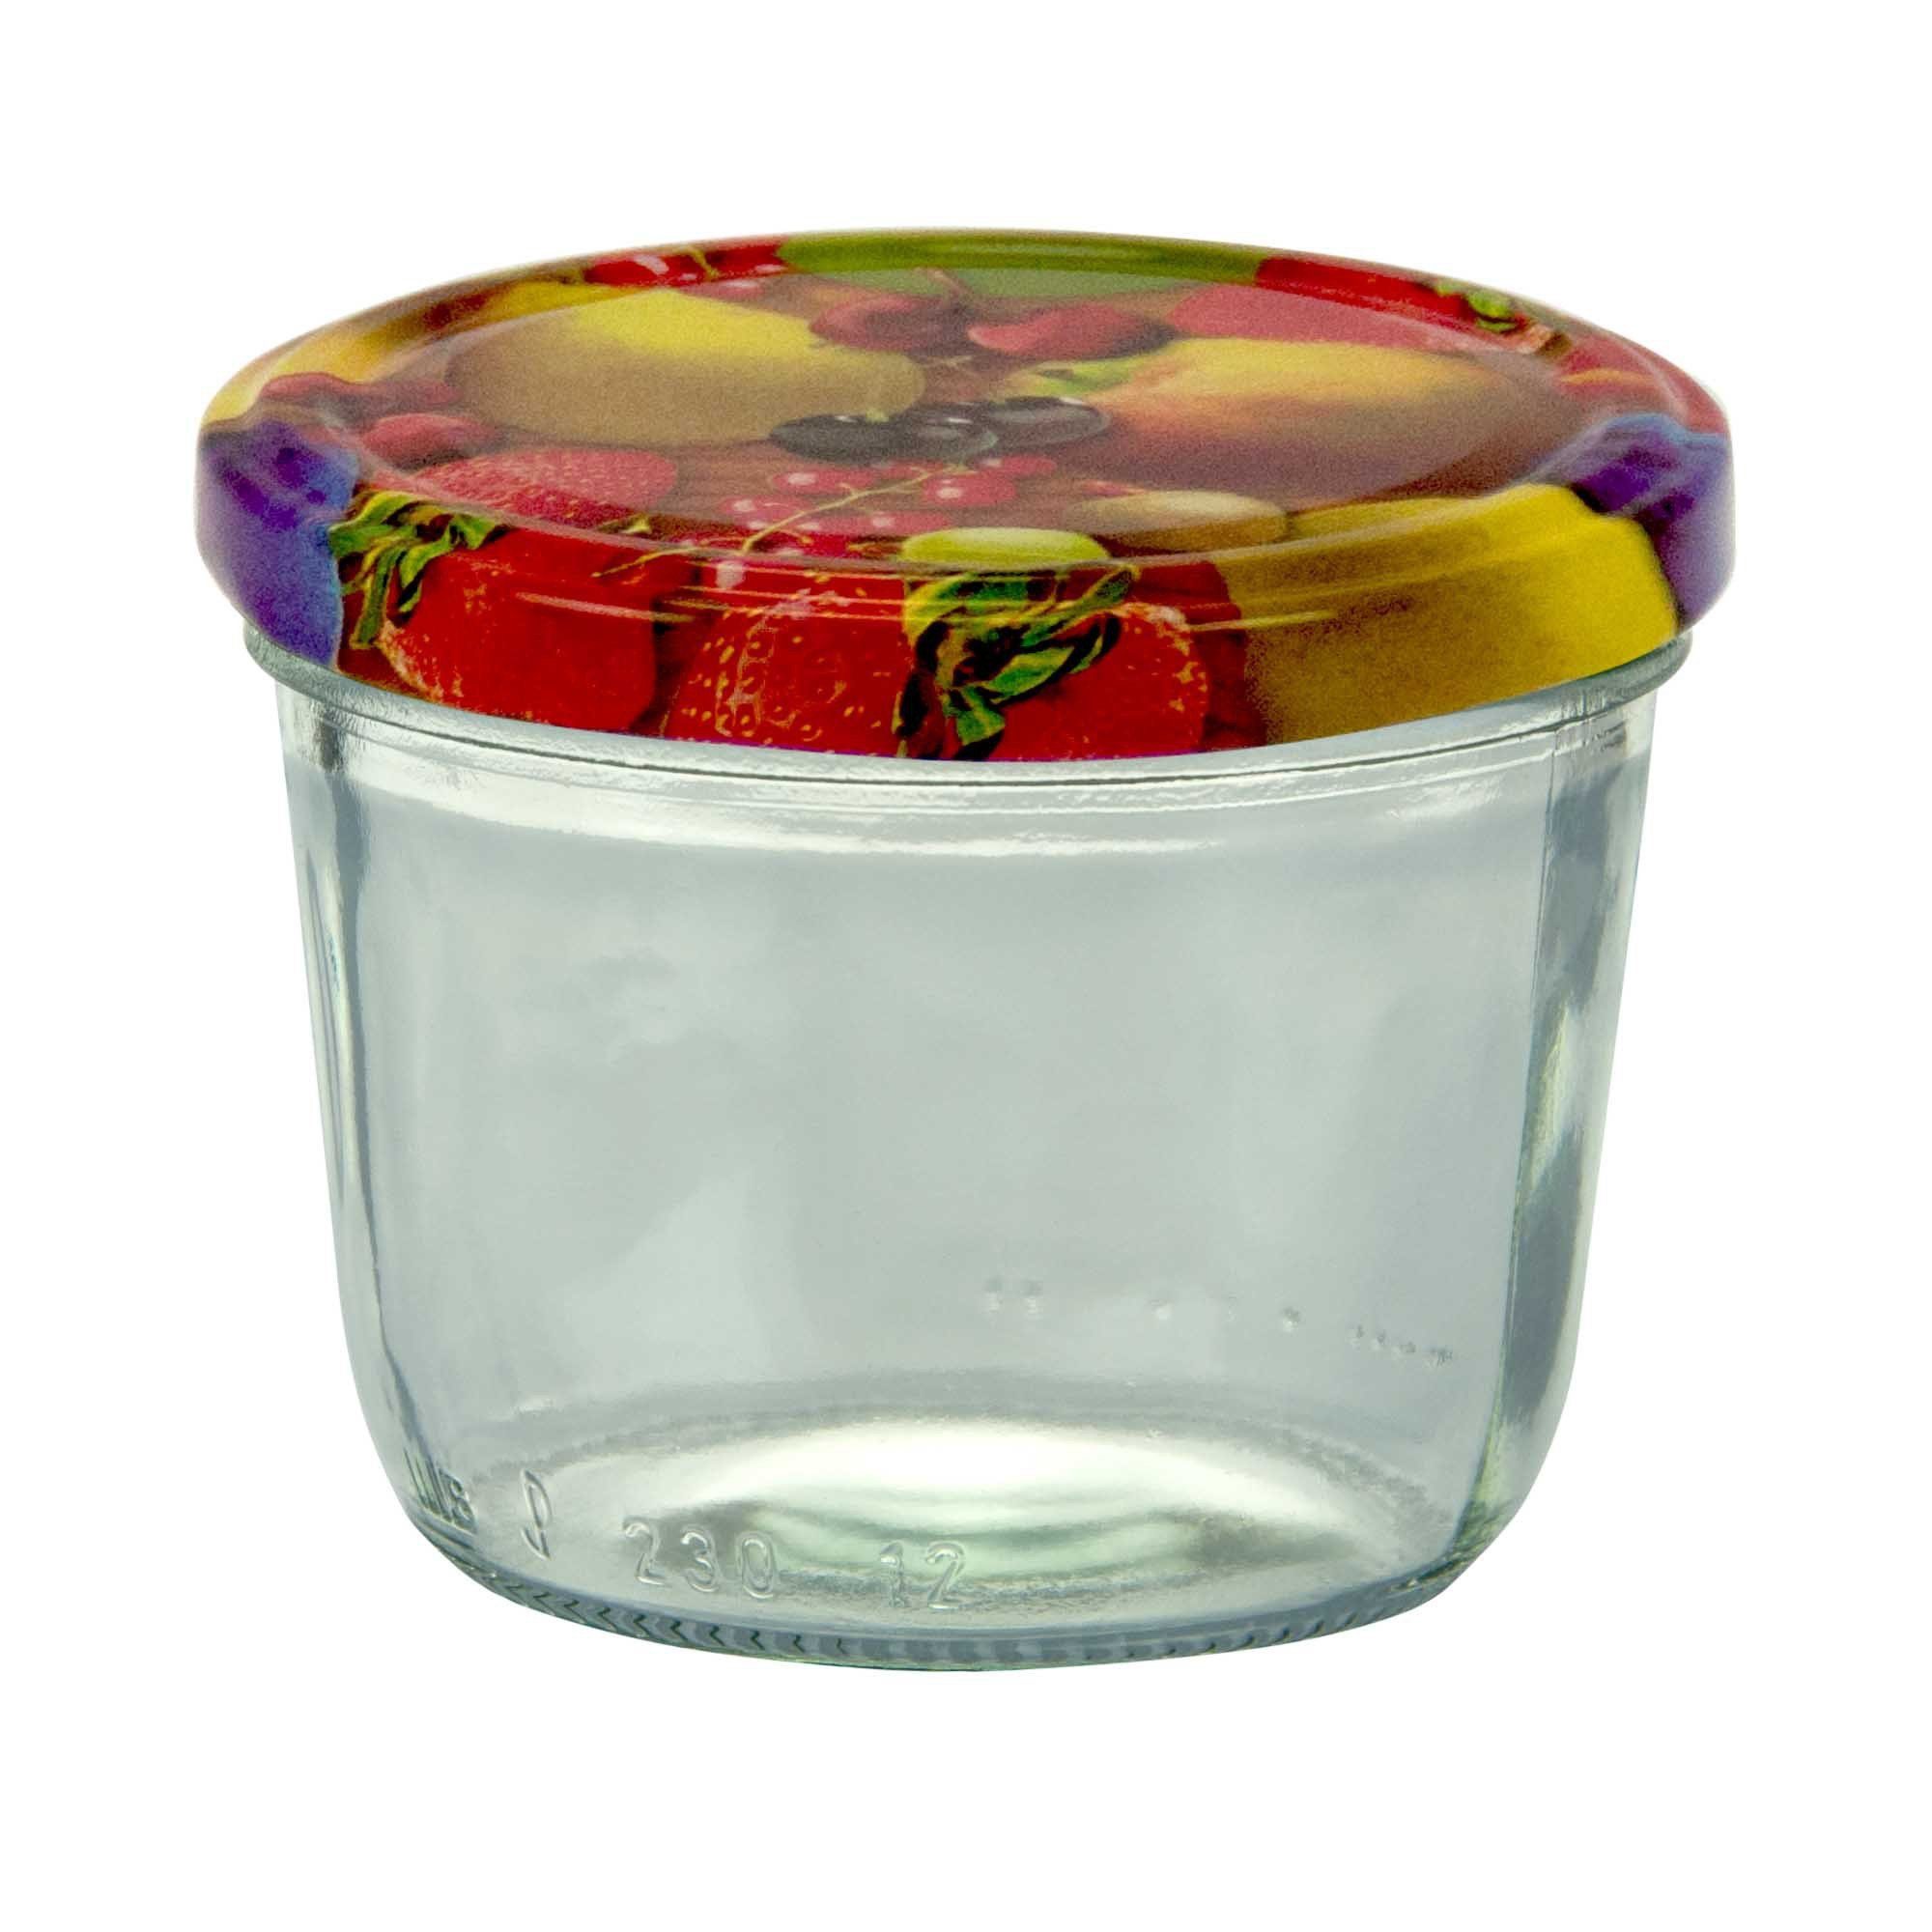 MamboCat Einmachglas Set Obst 25er To Deckel, gelbe ml 82 230 Sturzglas Marmeladenglas Birne Glas